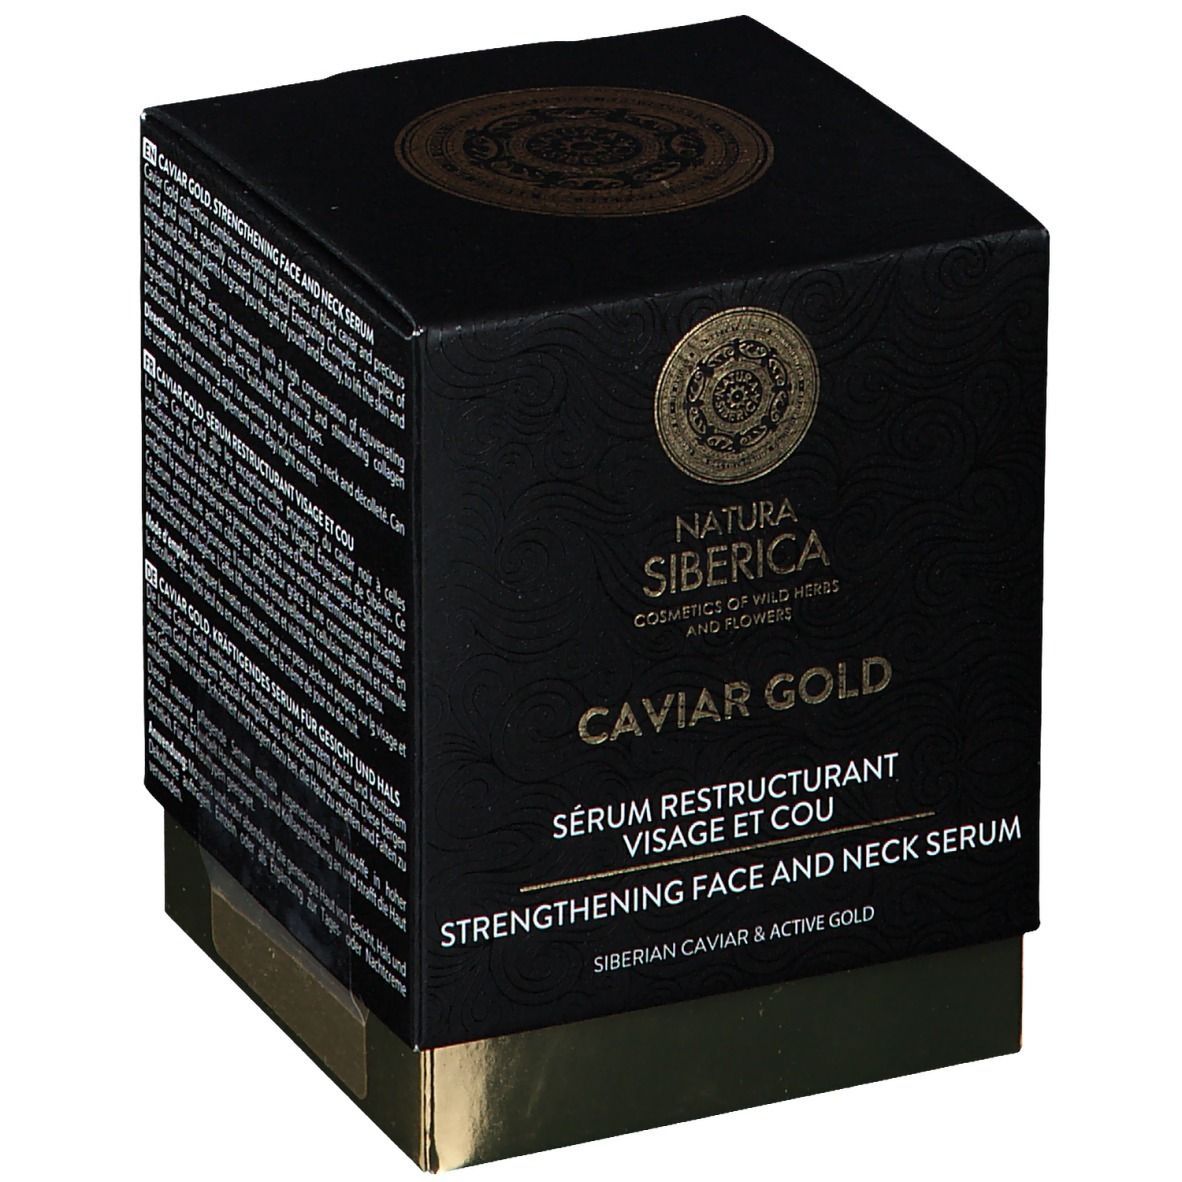 Natura Siberica Caviar Gold Sérum Restructurant Visage et Cou